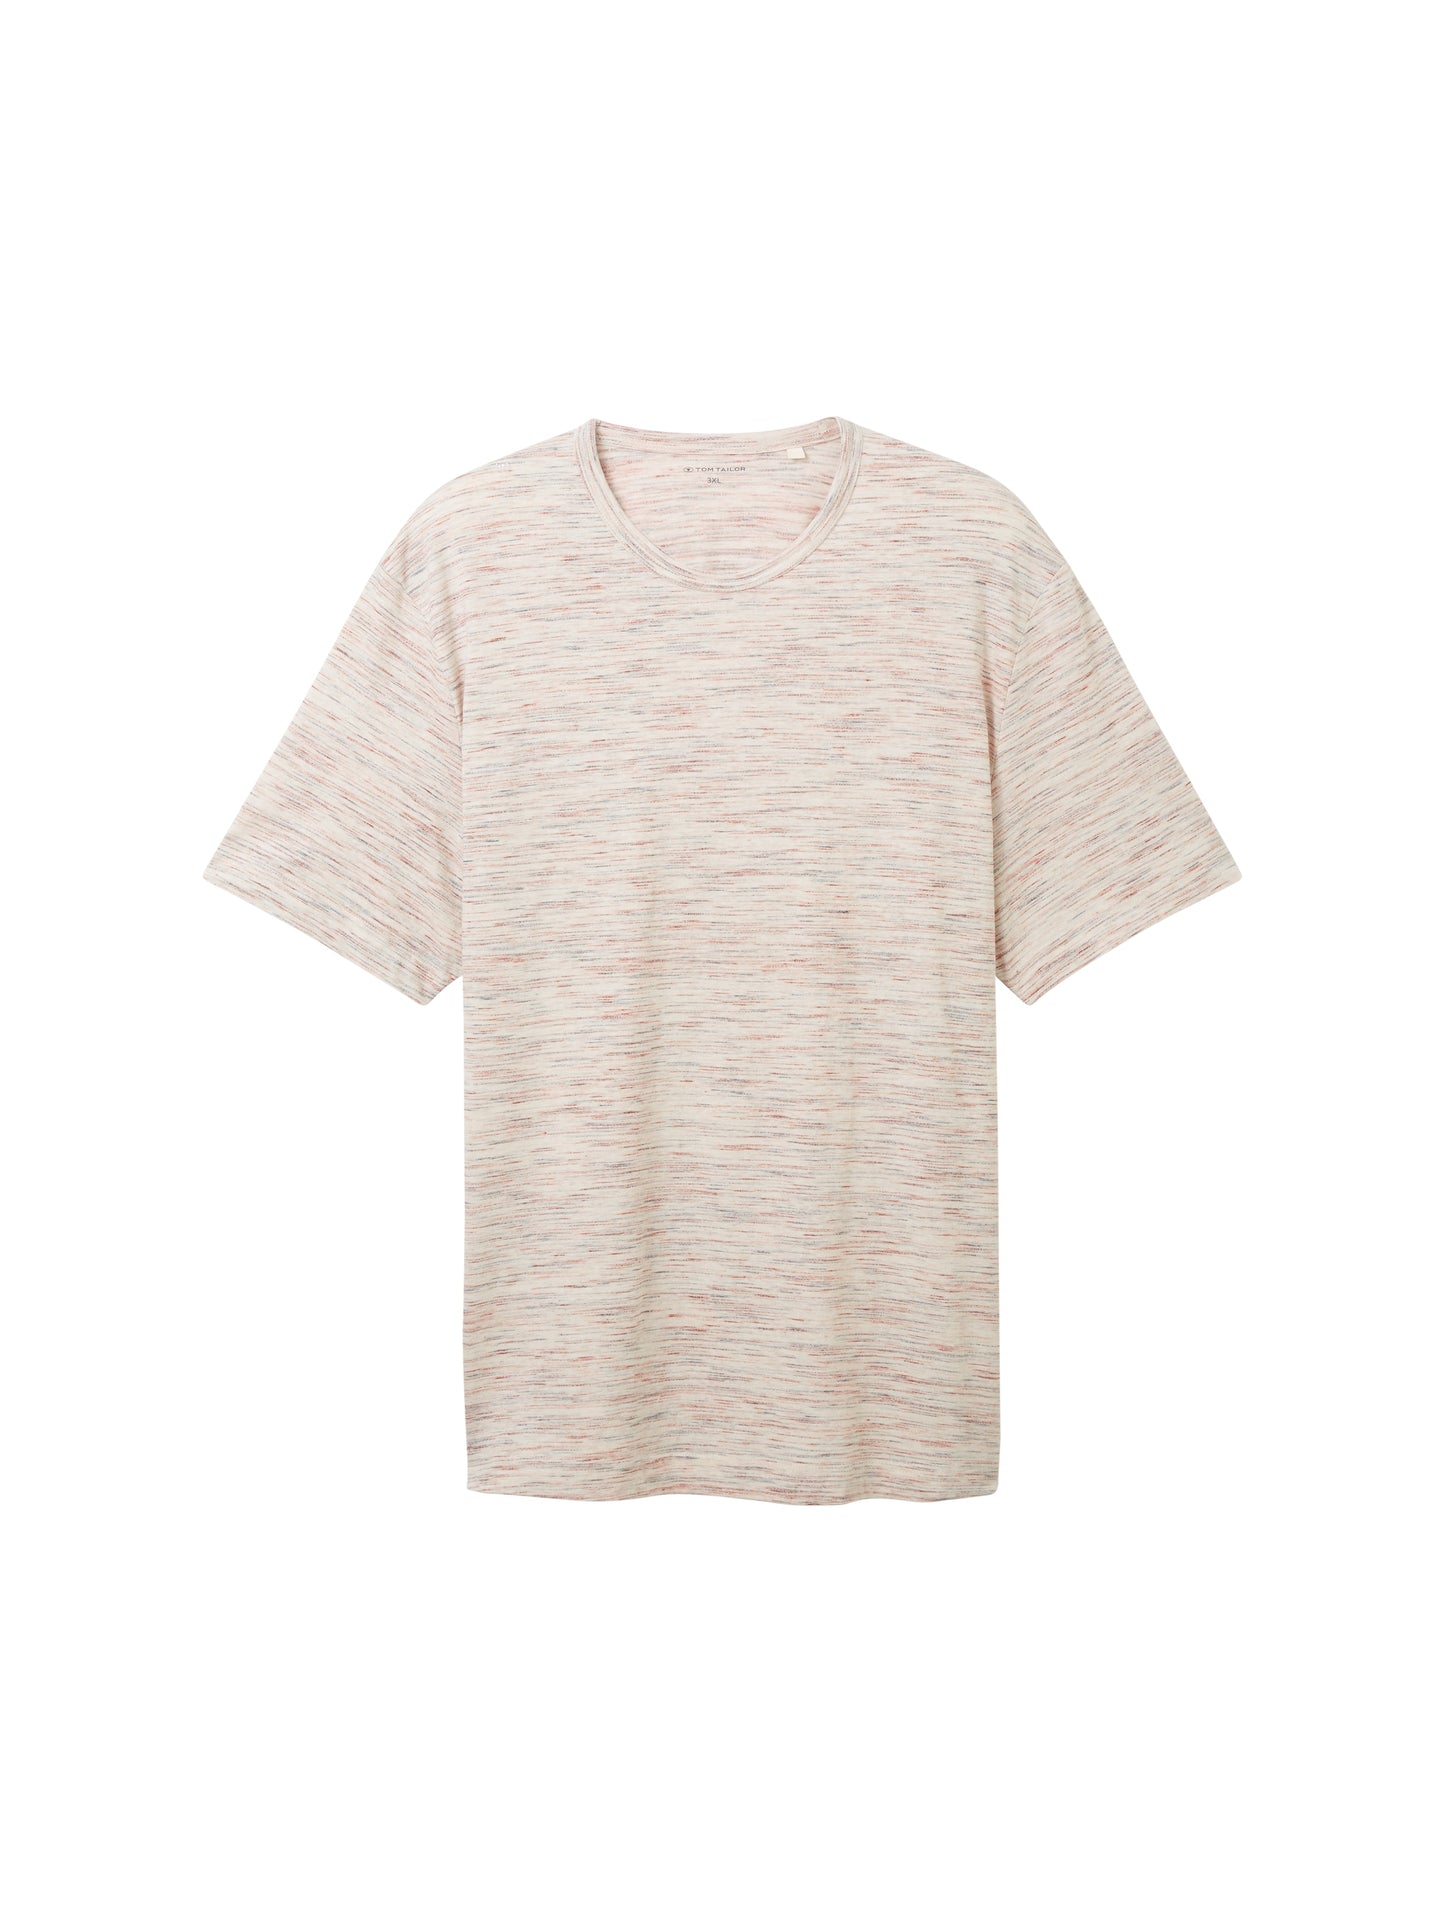 Tom Tailor T-Shirt Beige/roze